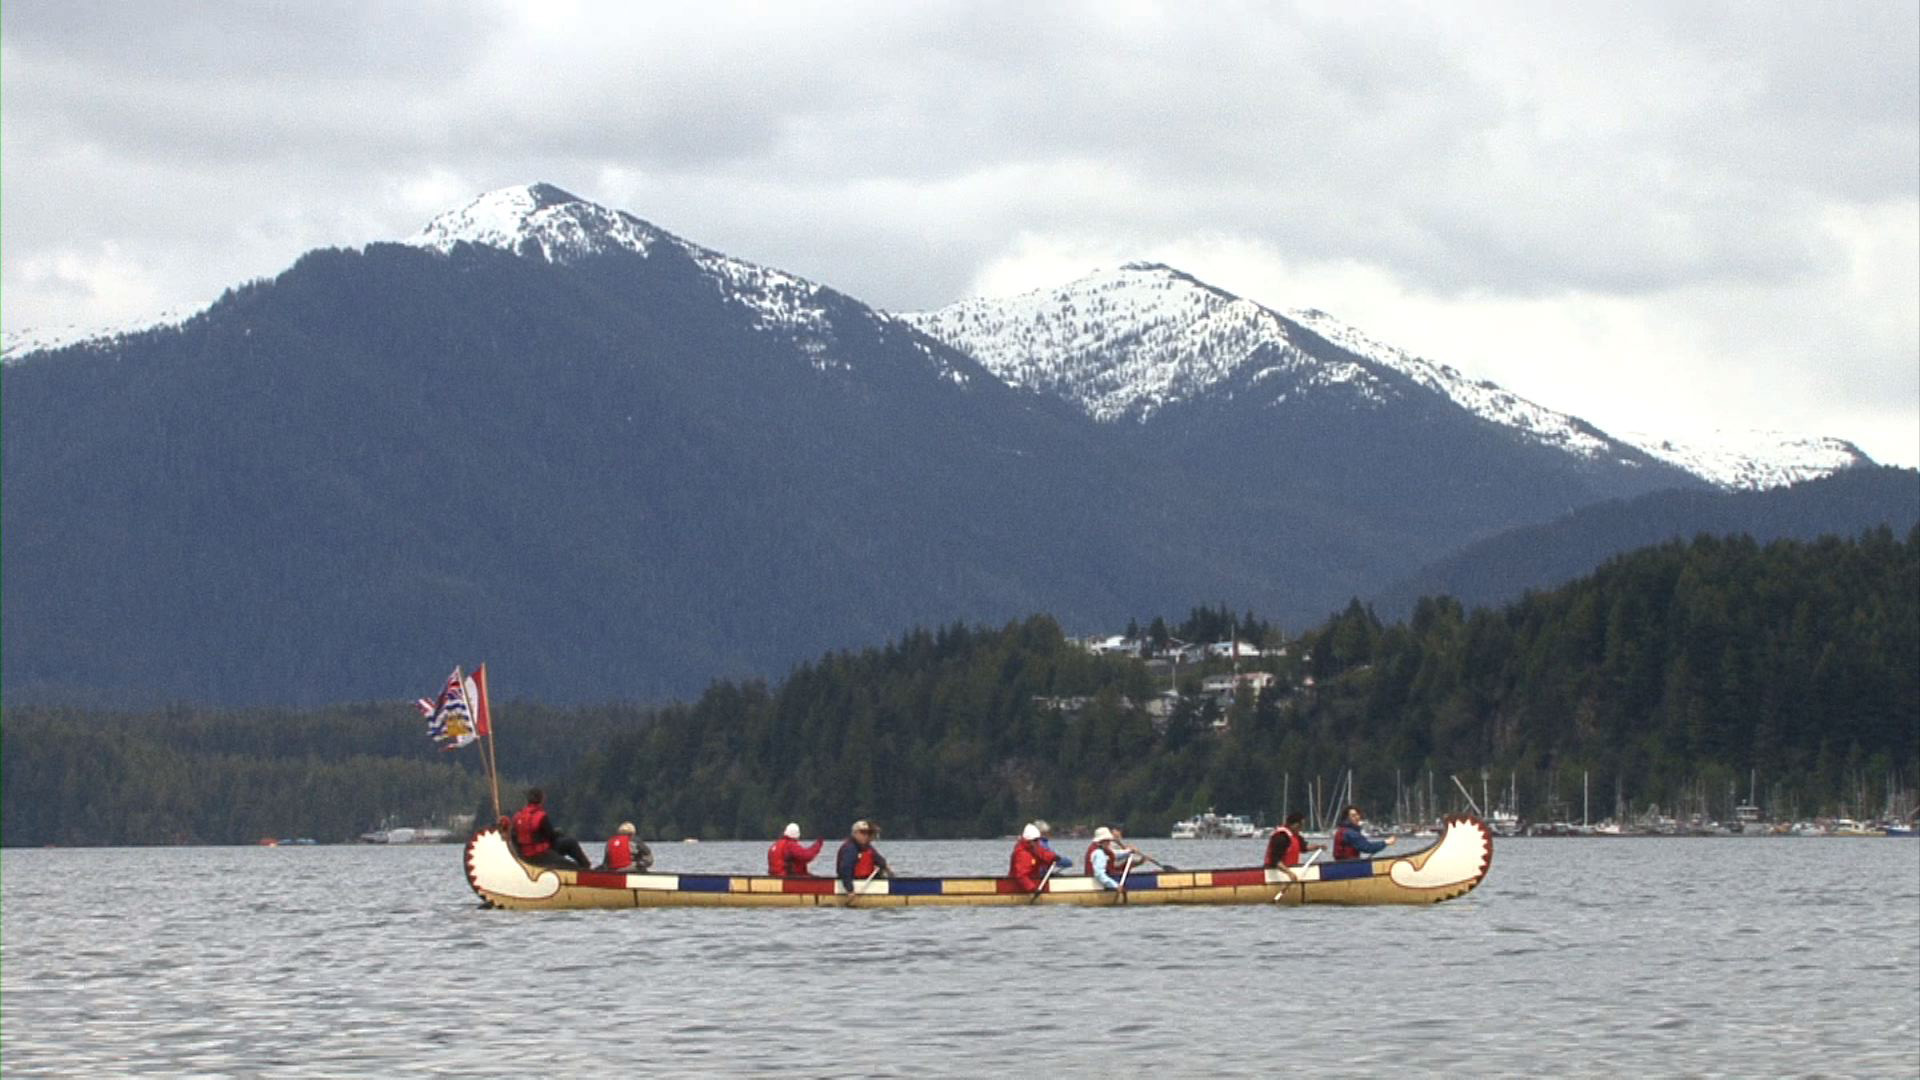 Joseph in Alaska on a Tsimshian First Nations canoe